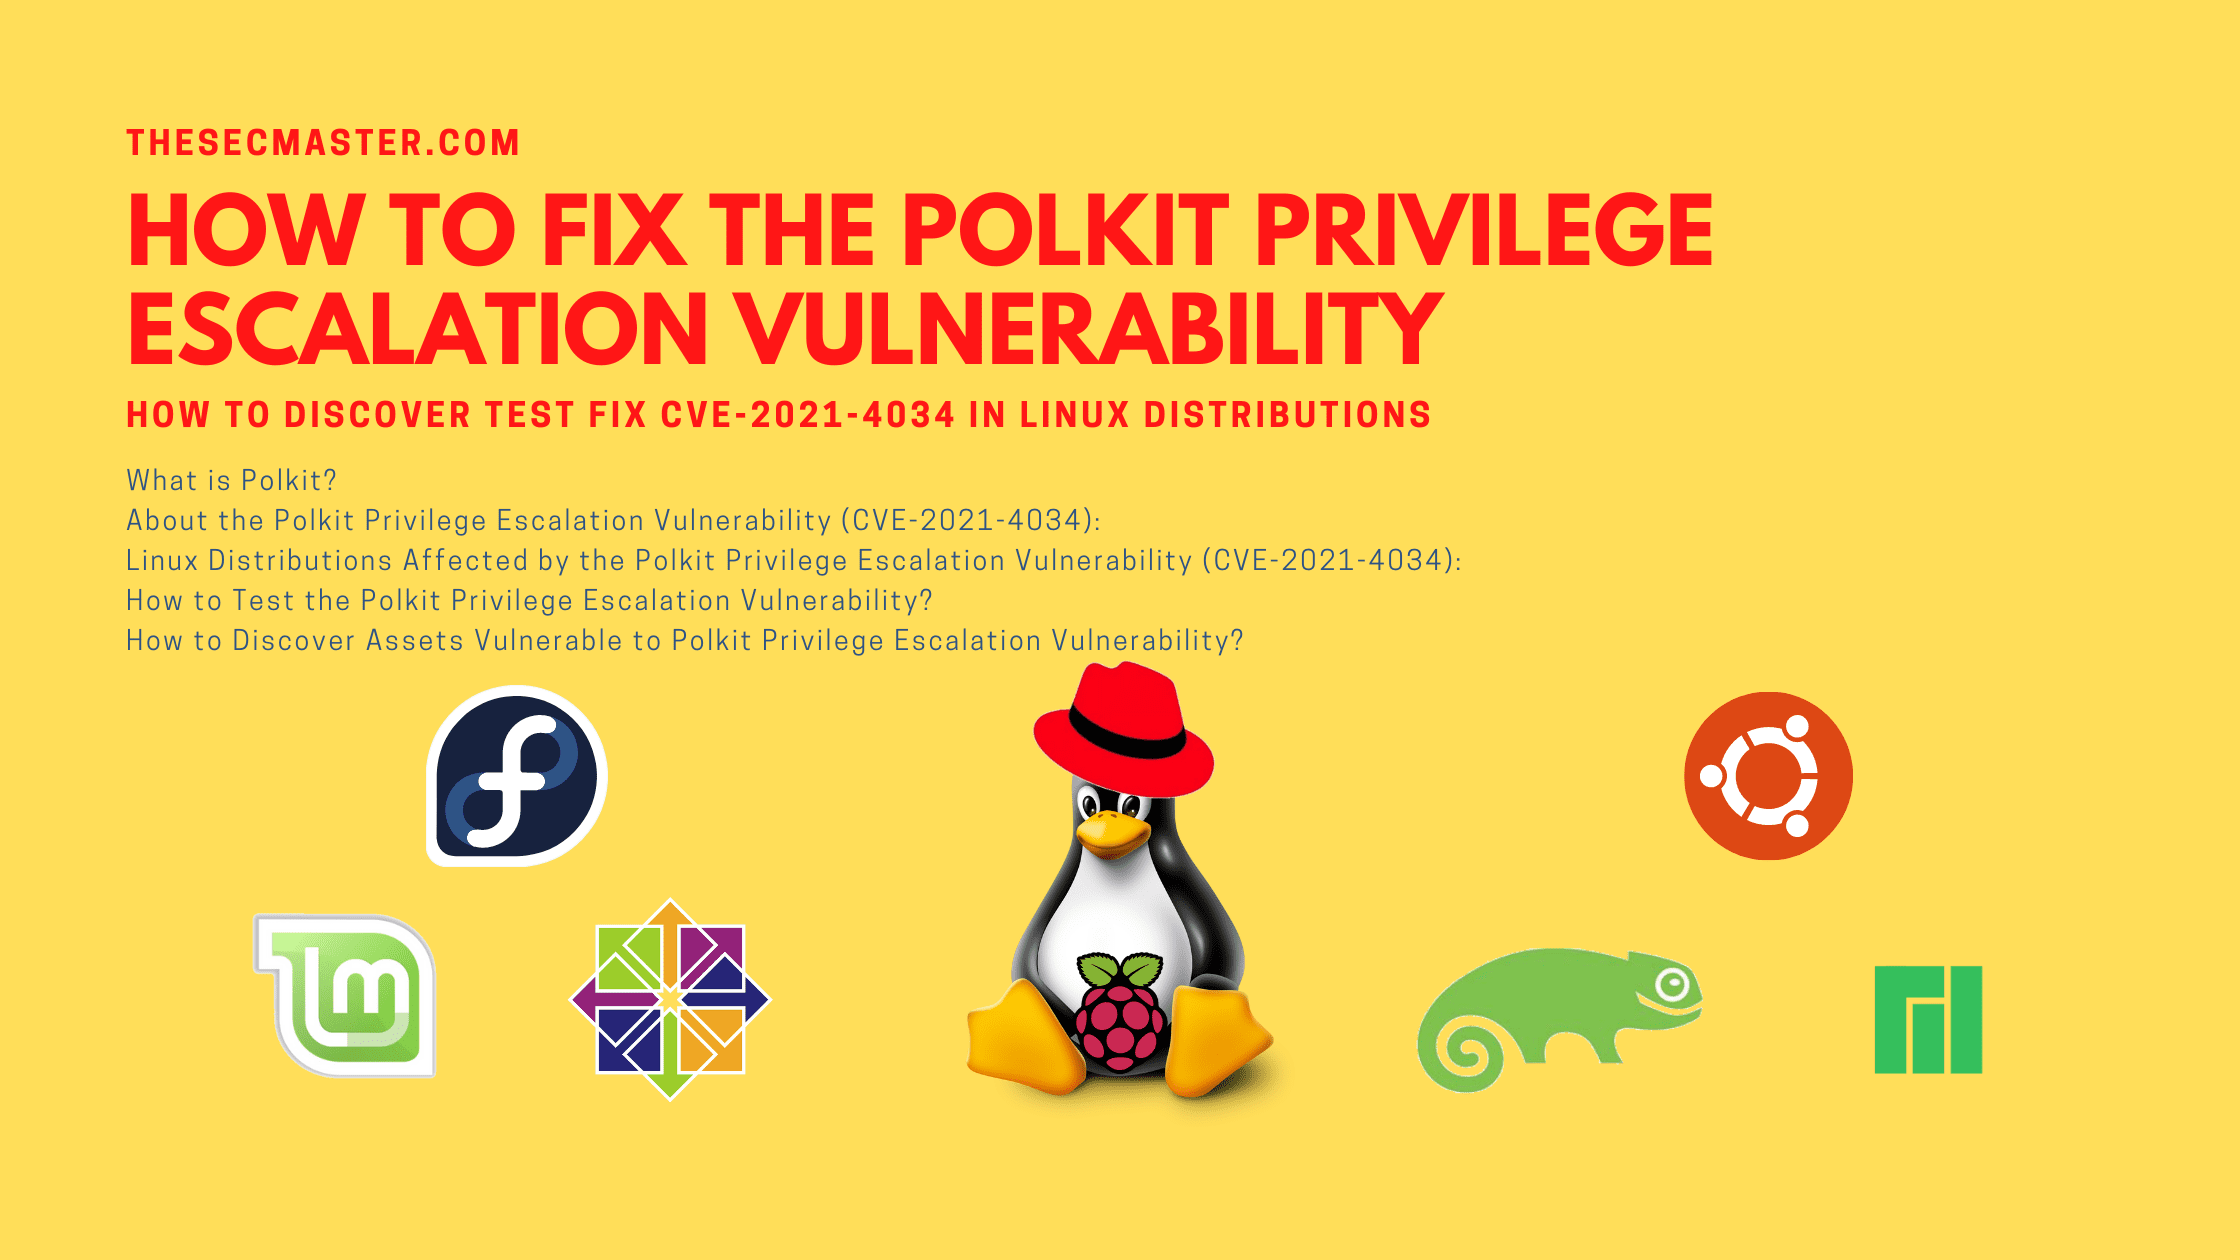 How To Fix The Polkit Privilege Escalation Vulnerability Cve 2021 40341